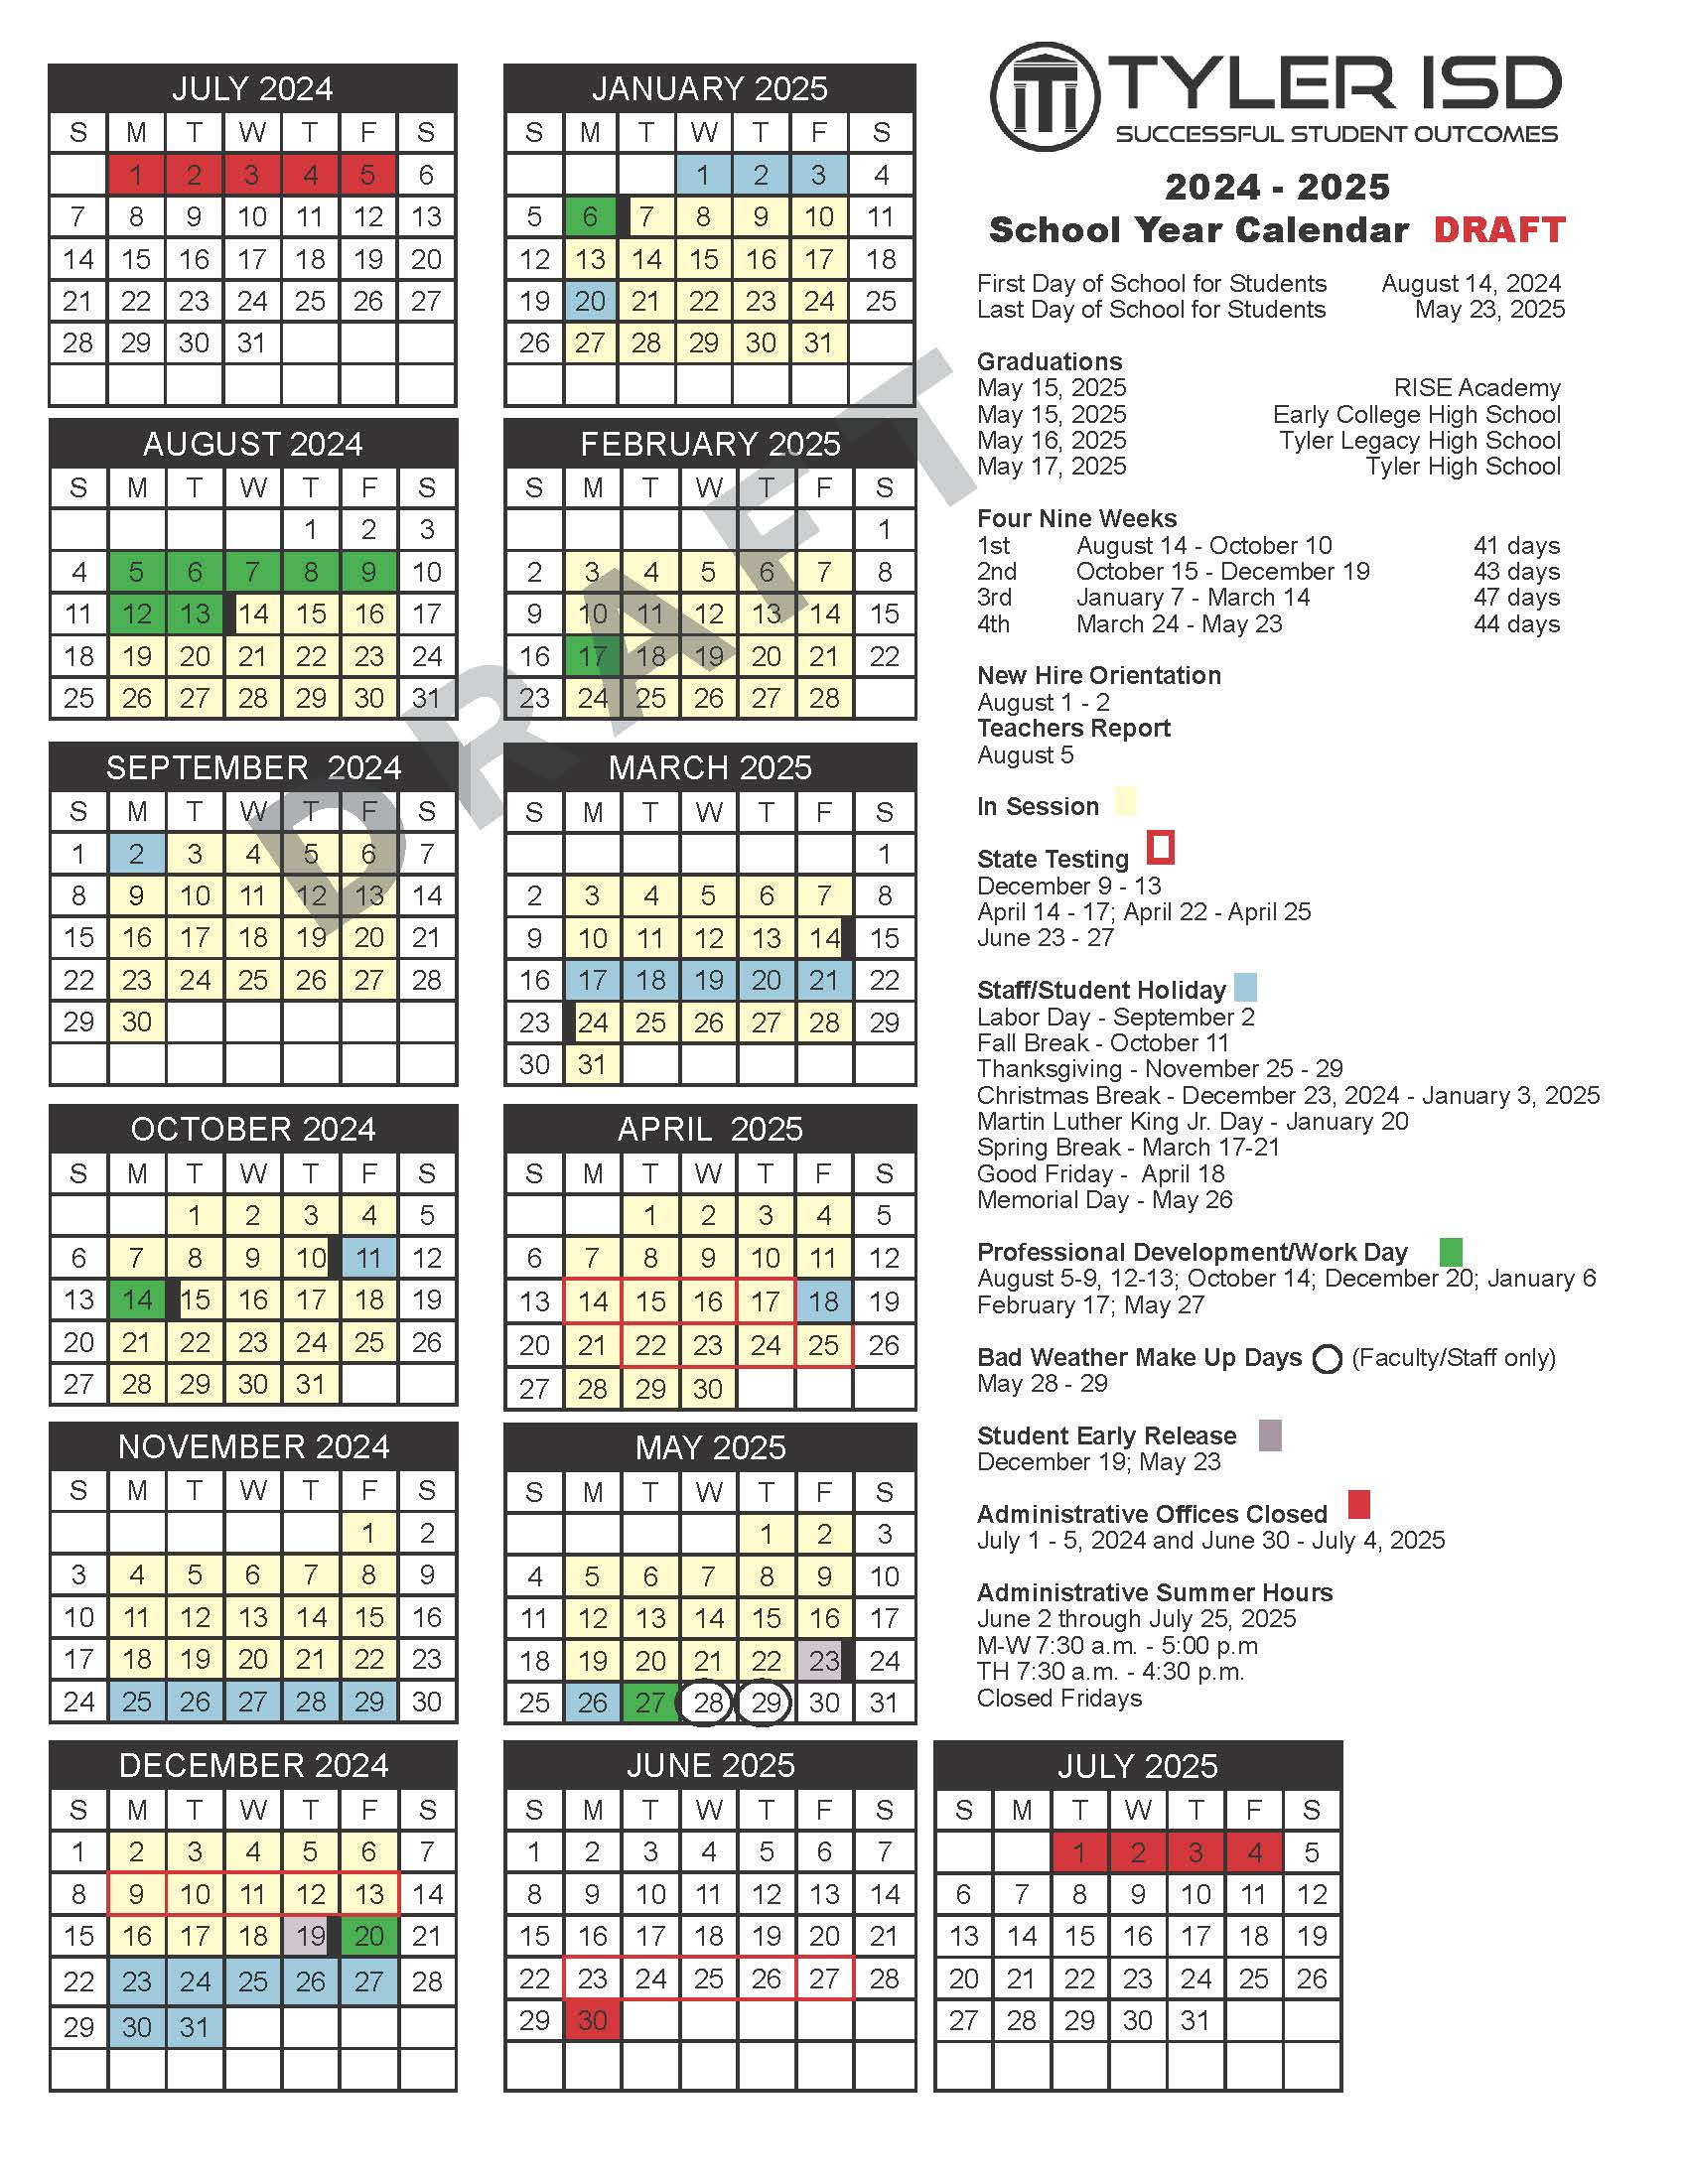 Tyler Independent School District Calendar 2024 and 2025